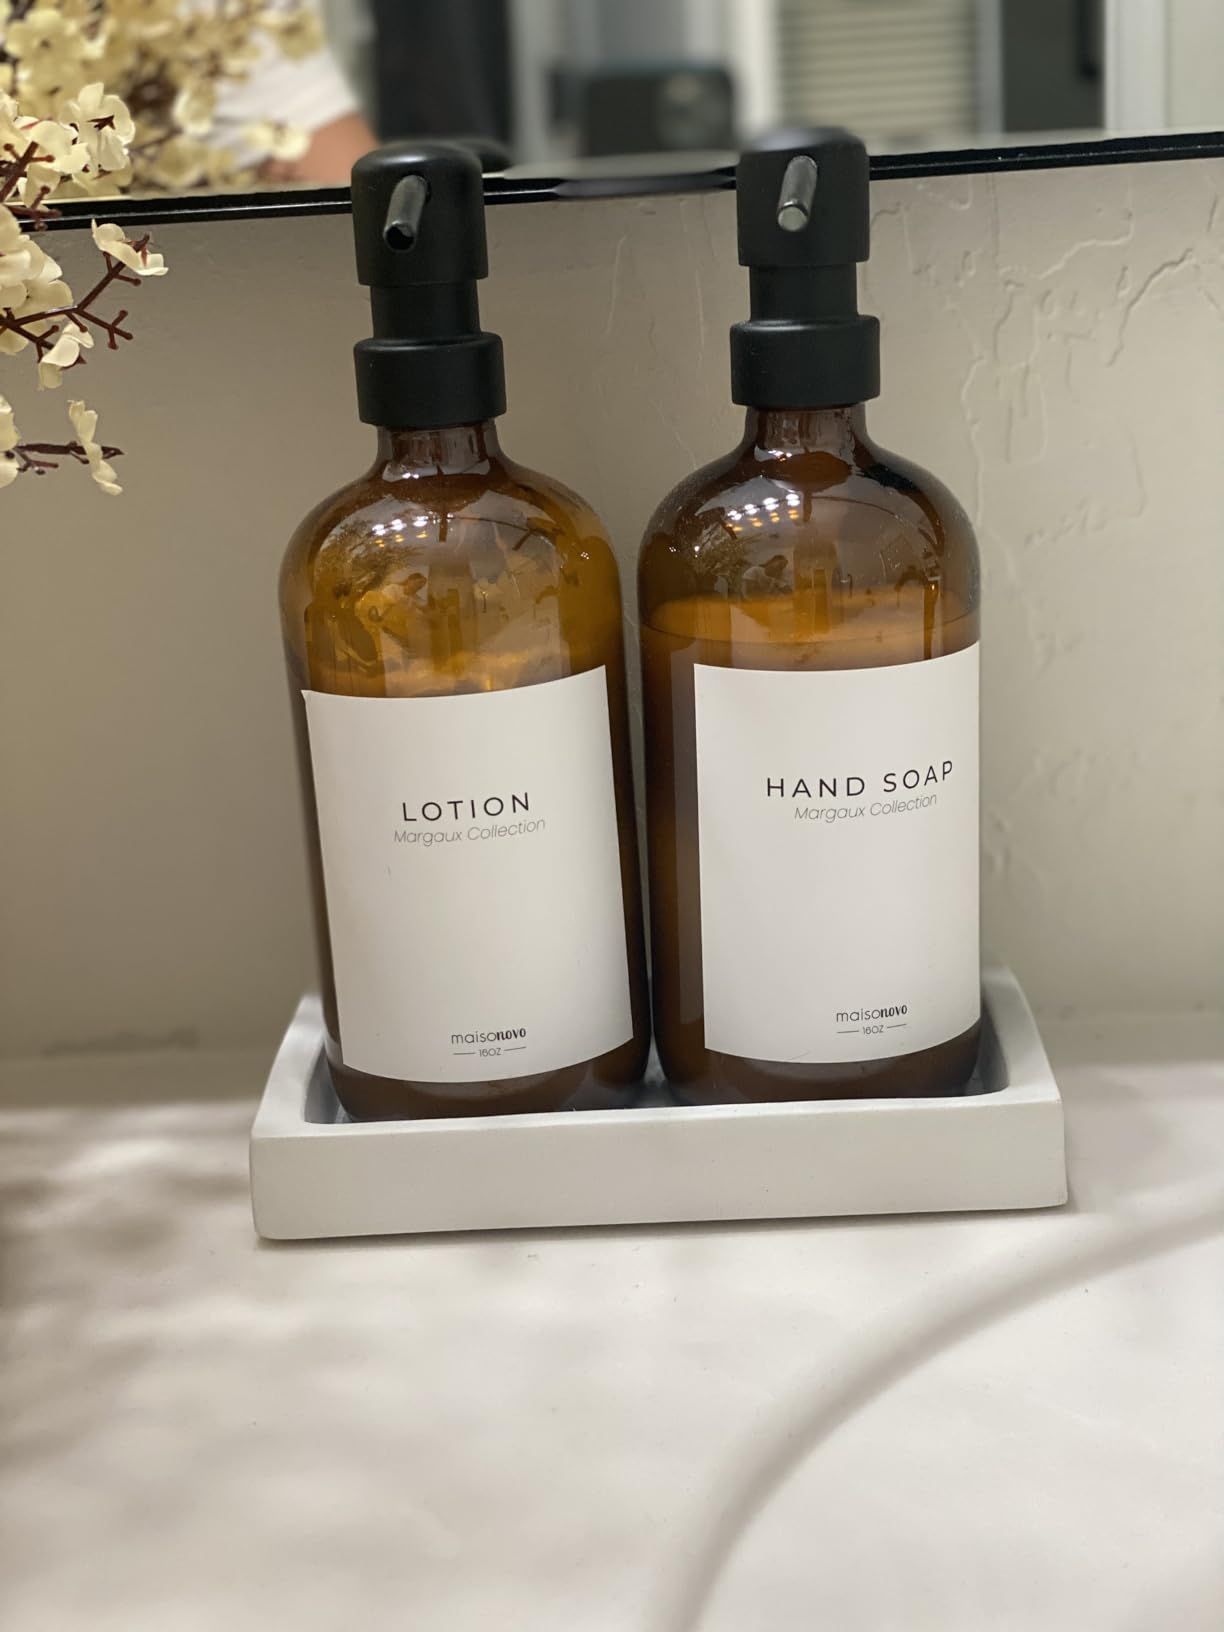 MaisoNovo Kitchen Soap Dispenser Set | Amber Bottles Black Pumps Set of 2 | Amazon (US)